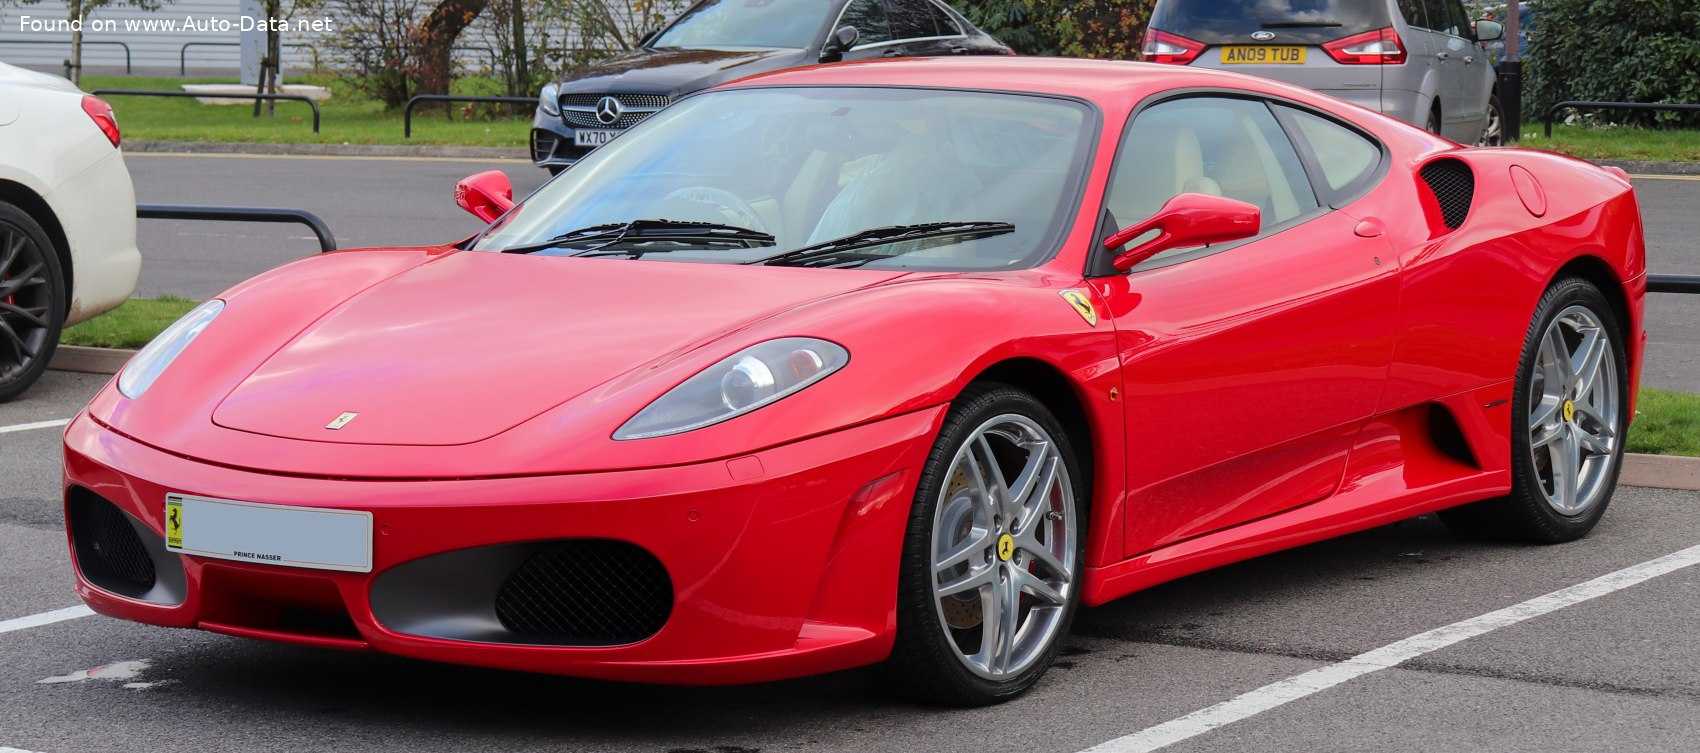 Ferrari f430 used buying guide 